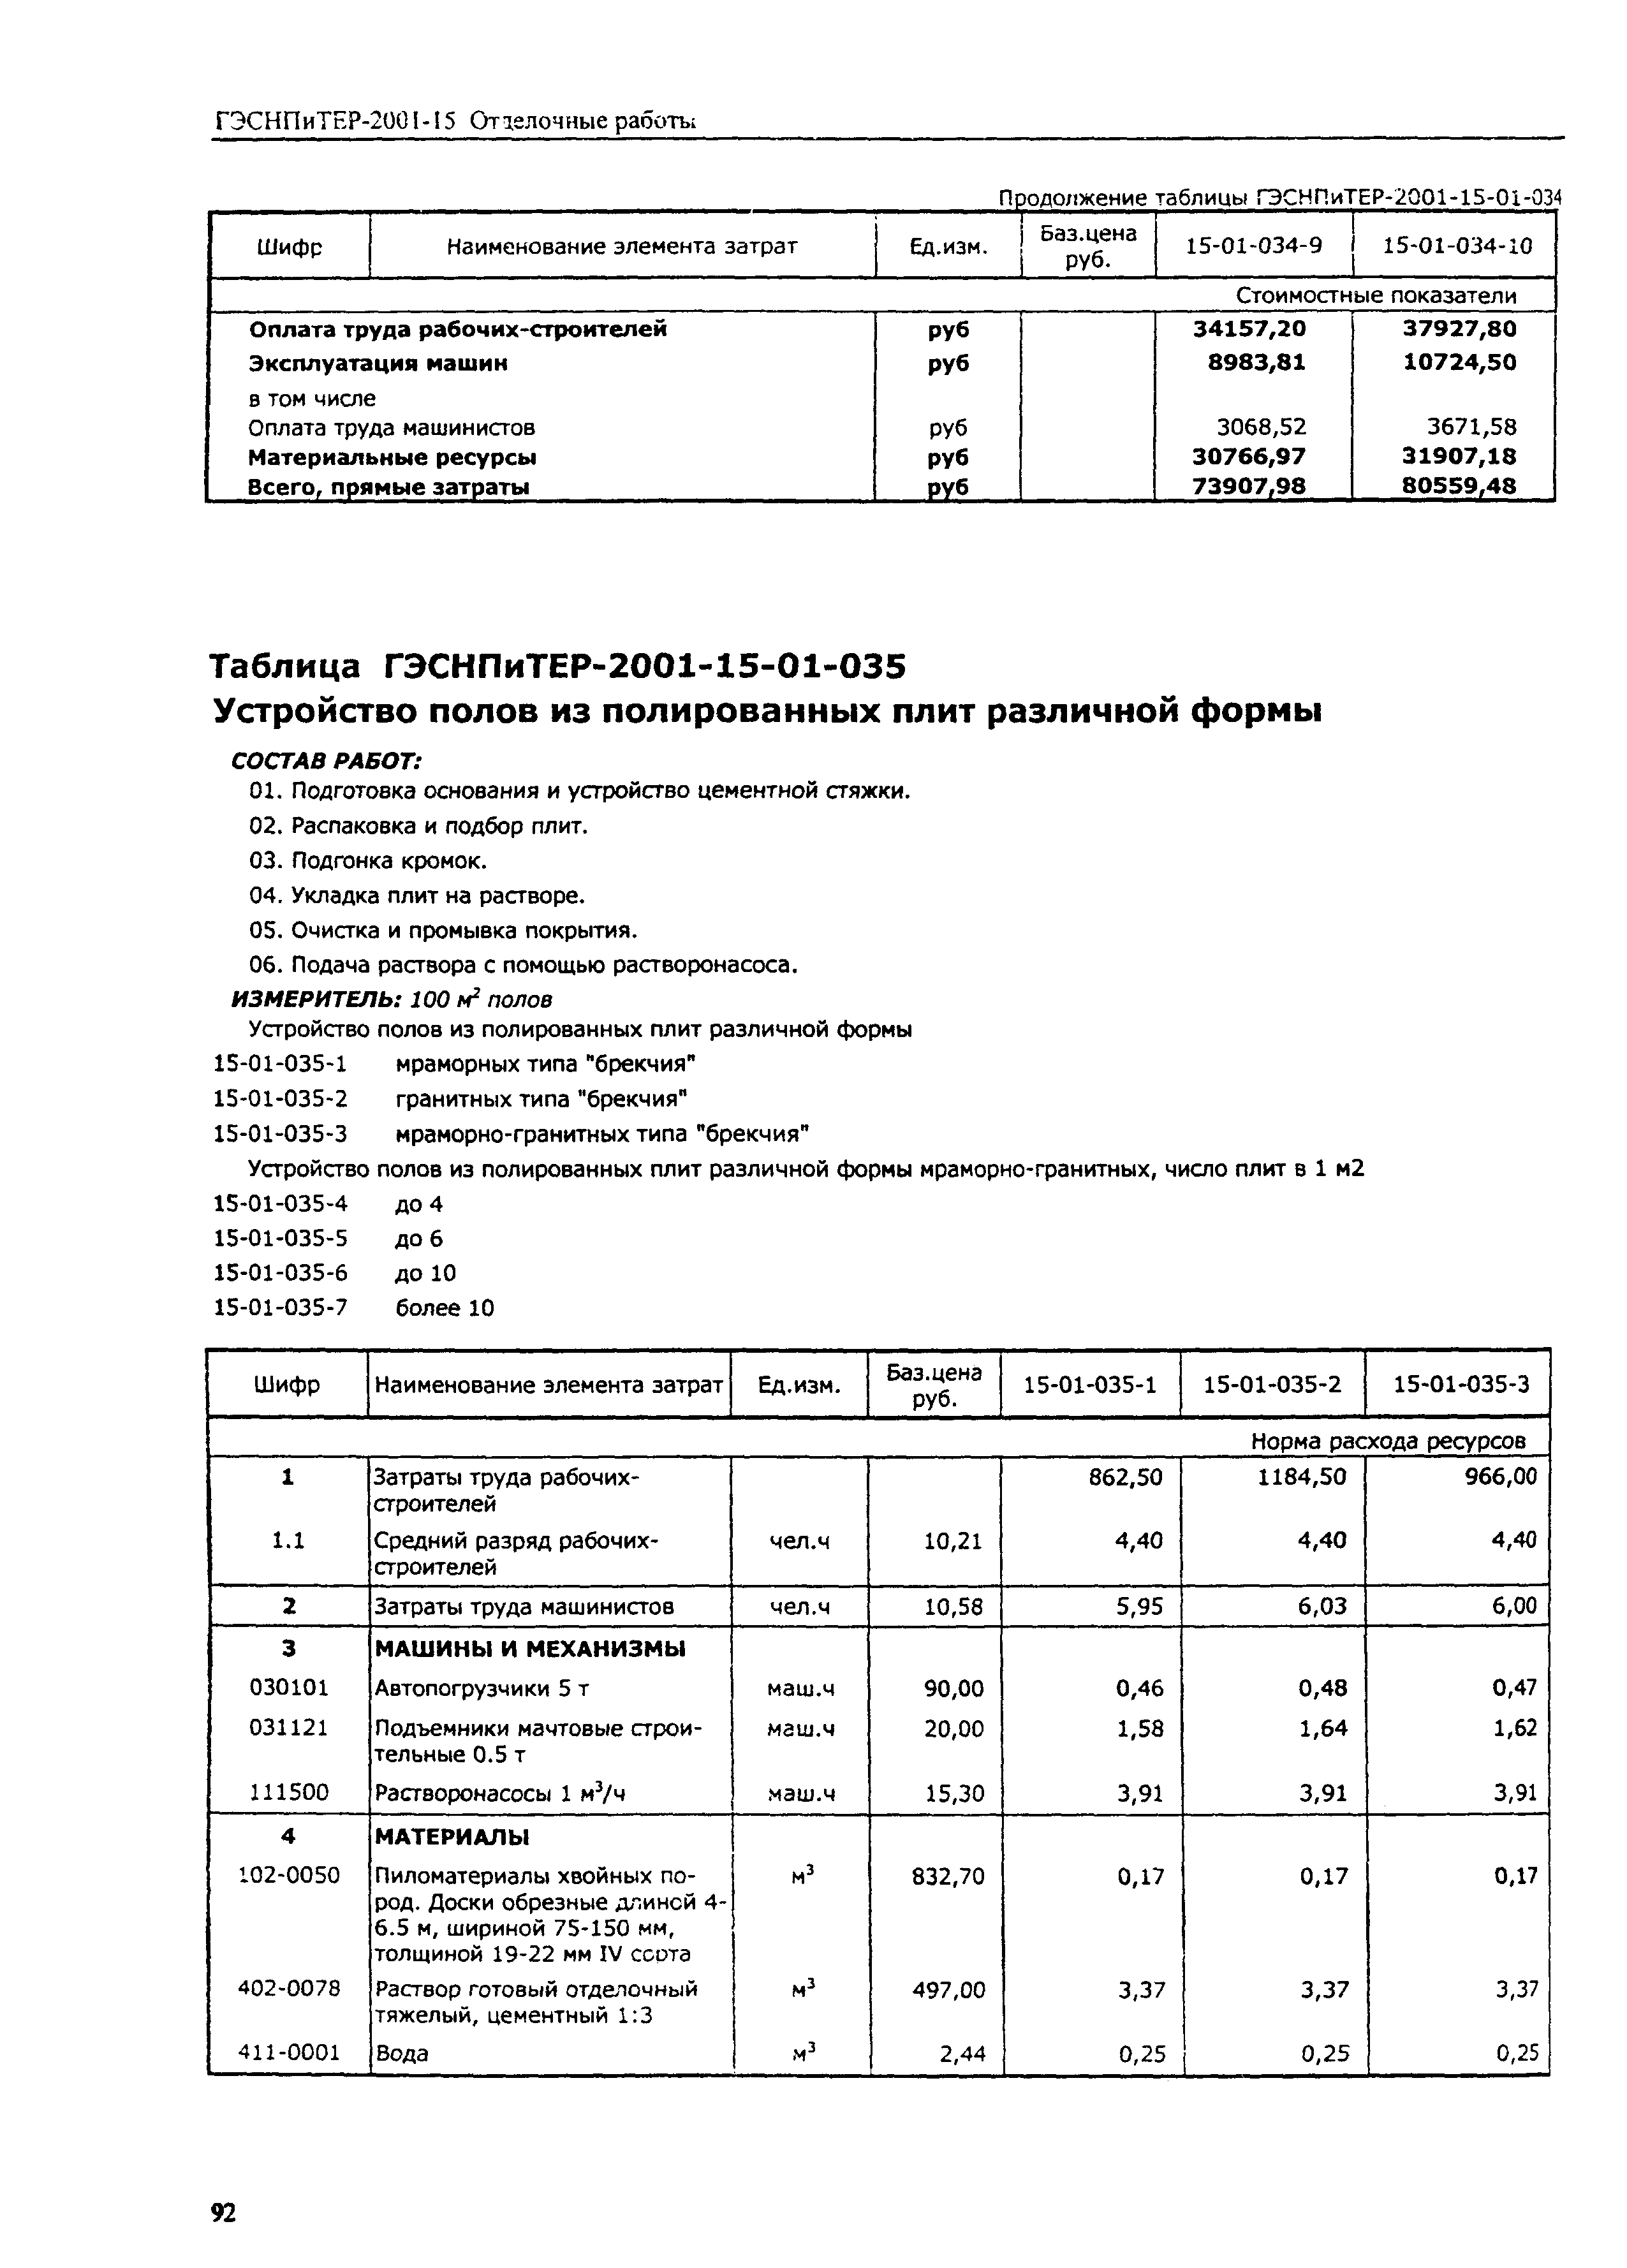 ГЭСНПиТЕР 2001-15 (I)